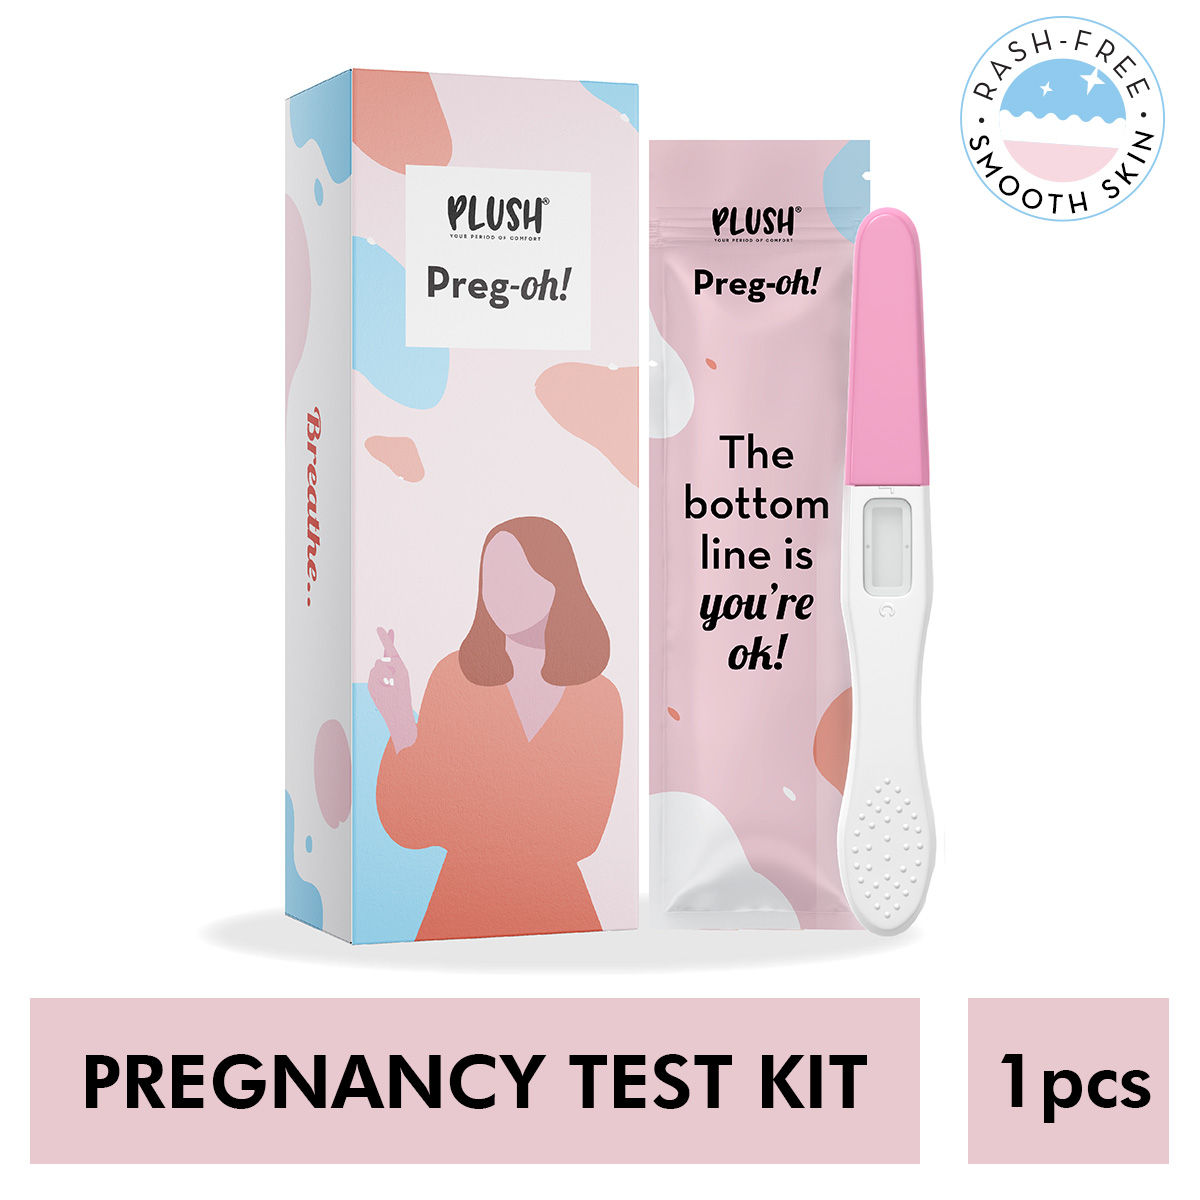 Plush Preg-oh! Midstream Pregnancy Kit Test For Women 99% Accuracy (1N)